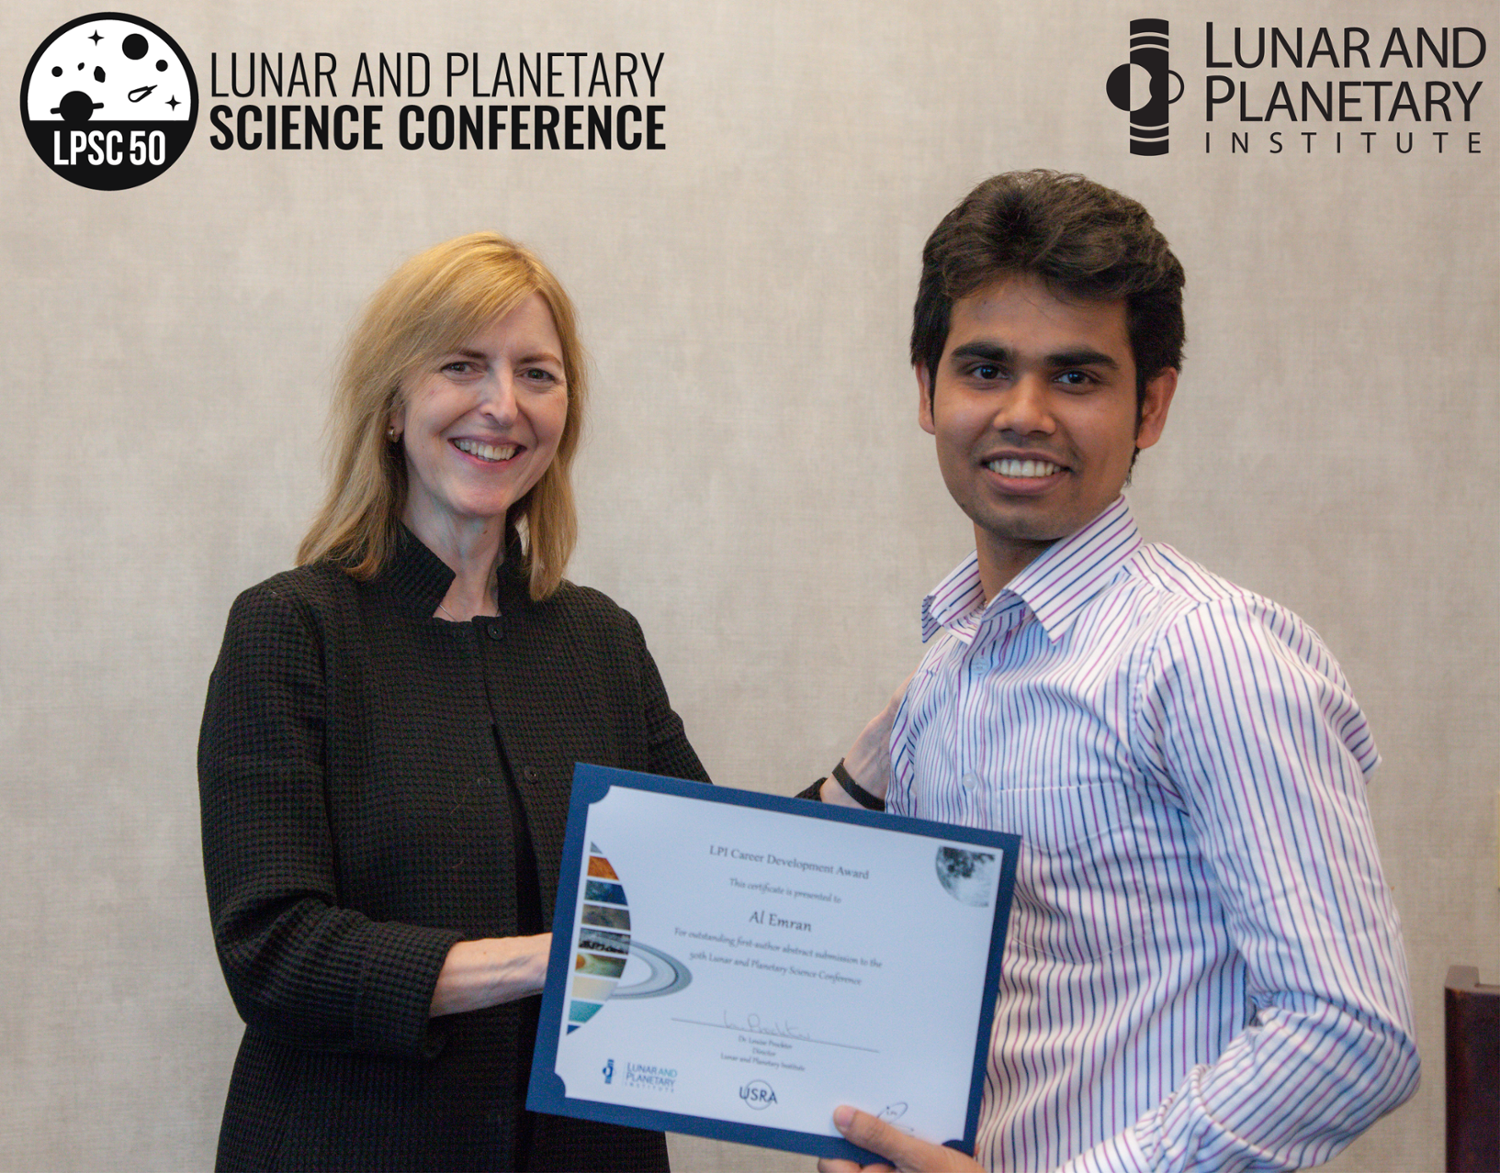 Al Emran receiving the 2019 Lunar and Planetary Institute Career Development award for 2019.